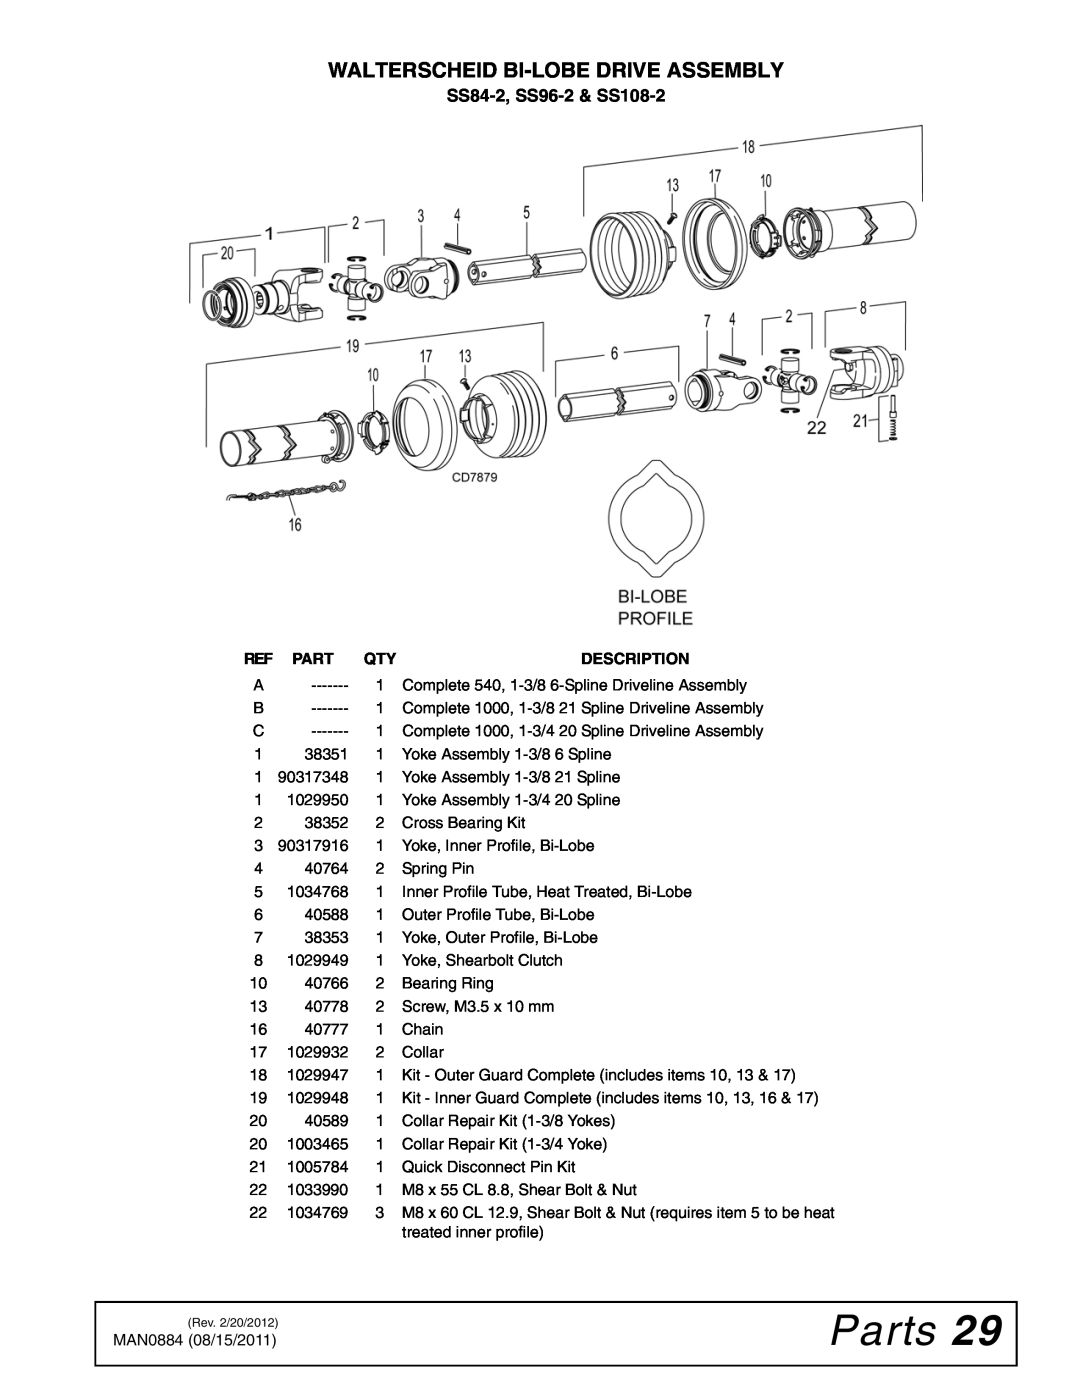 Woods Equipment manual Walterscheid Bi-Lobe Drive Assembly, Parts, SS84-2, SS96-2 & SS108-2 